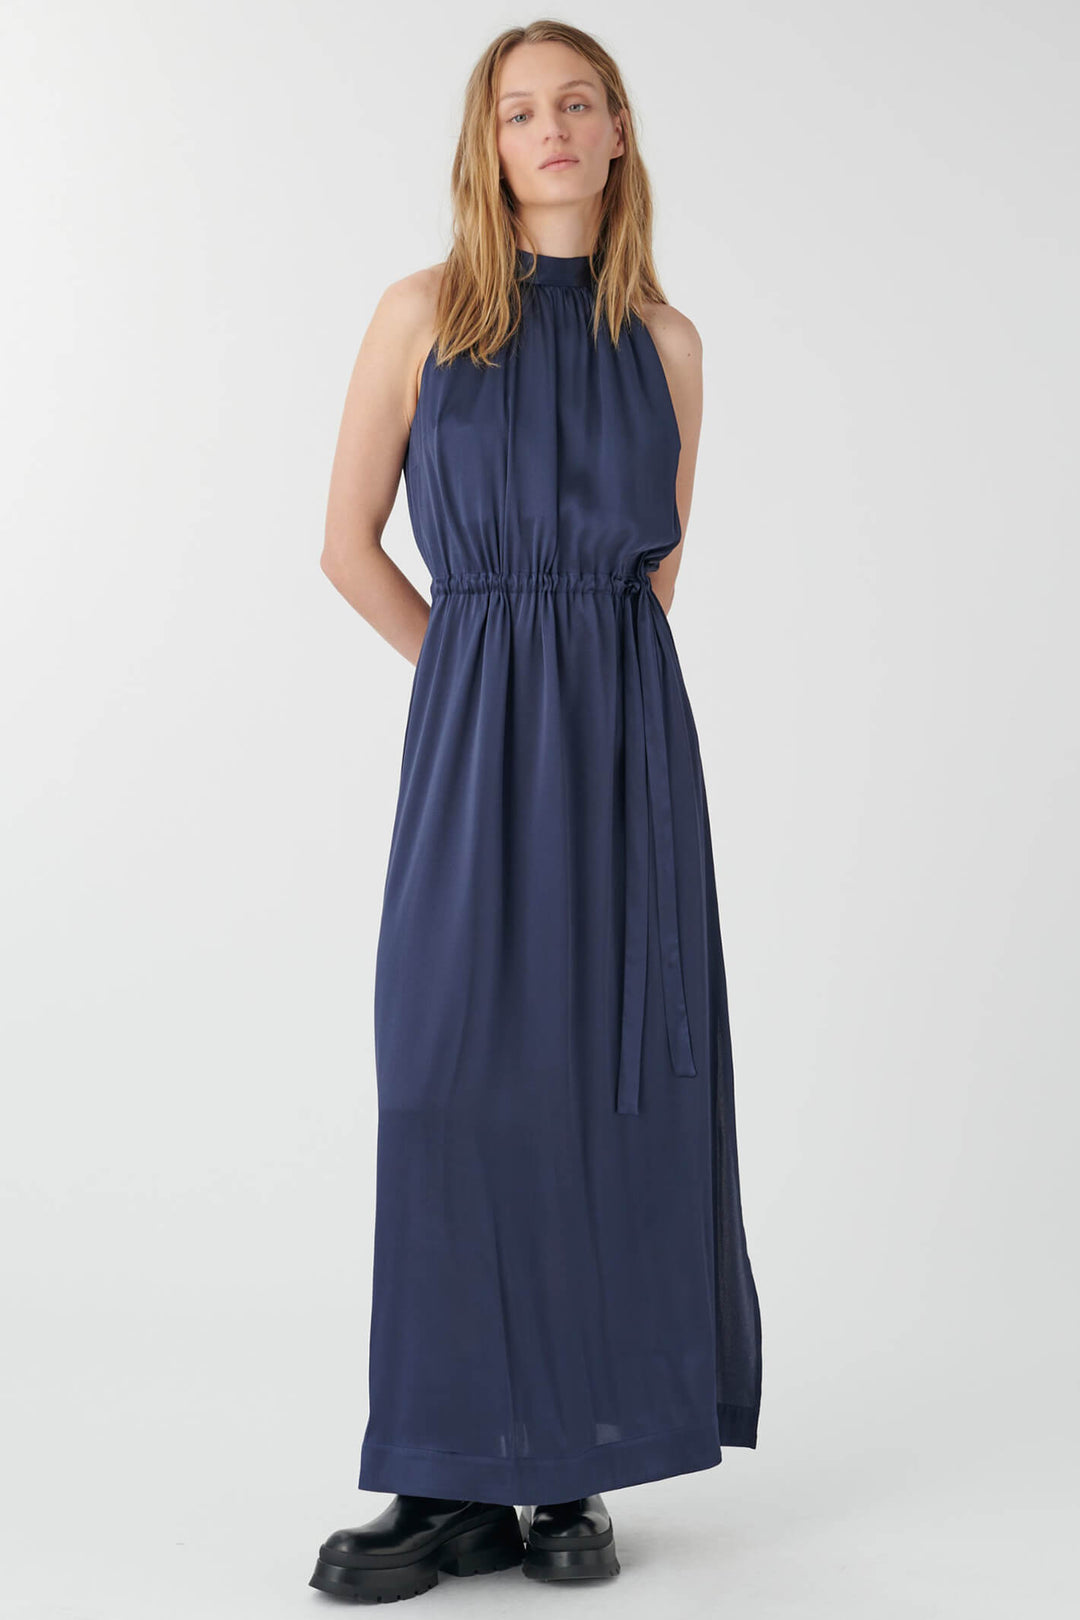 Dea Kudibal 1530723 Nataliah Optical Blue Halterneck Dress - Olivia Grace Fashion